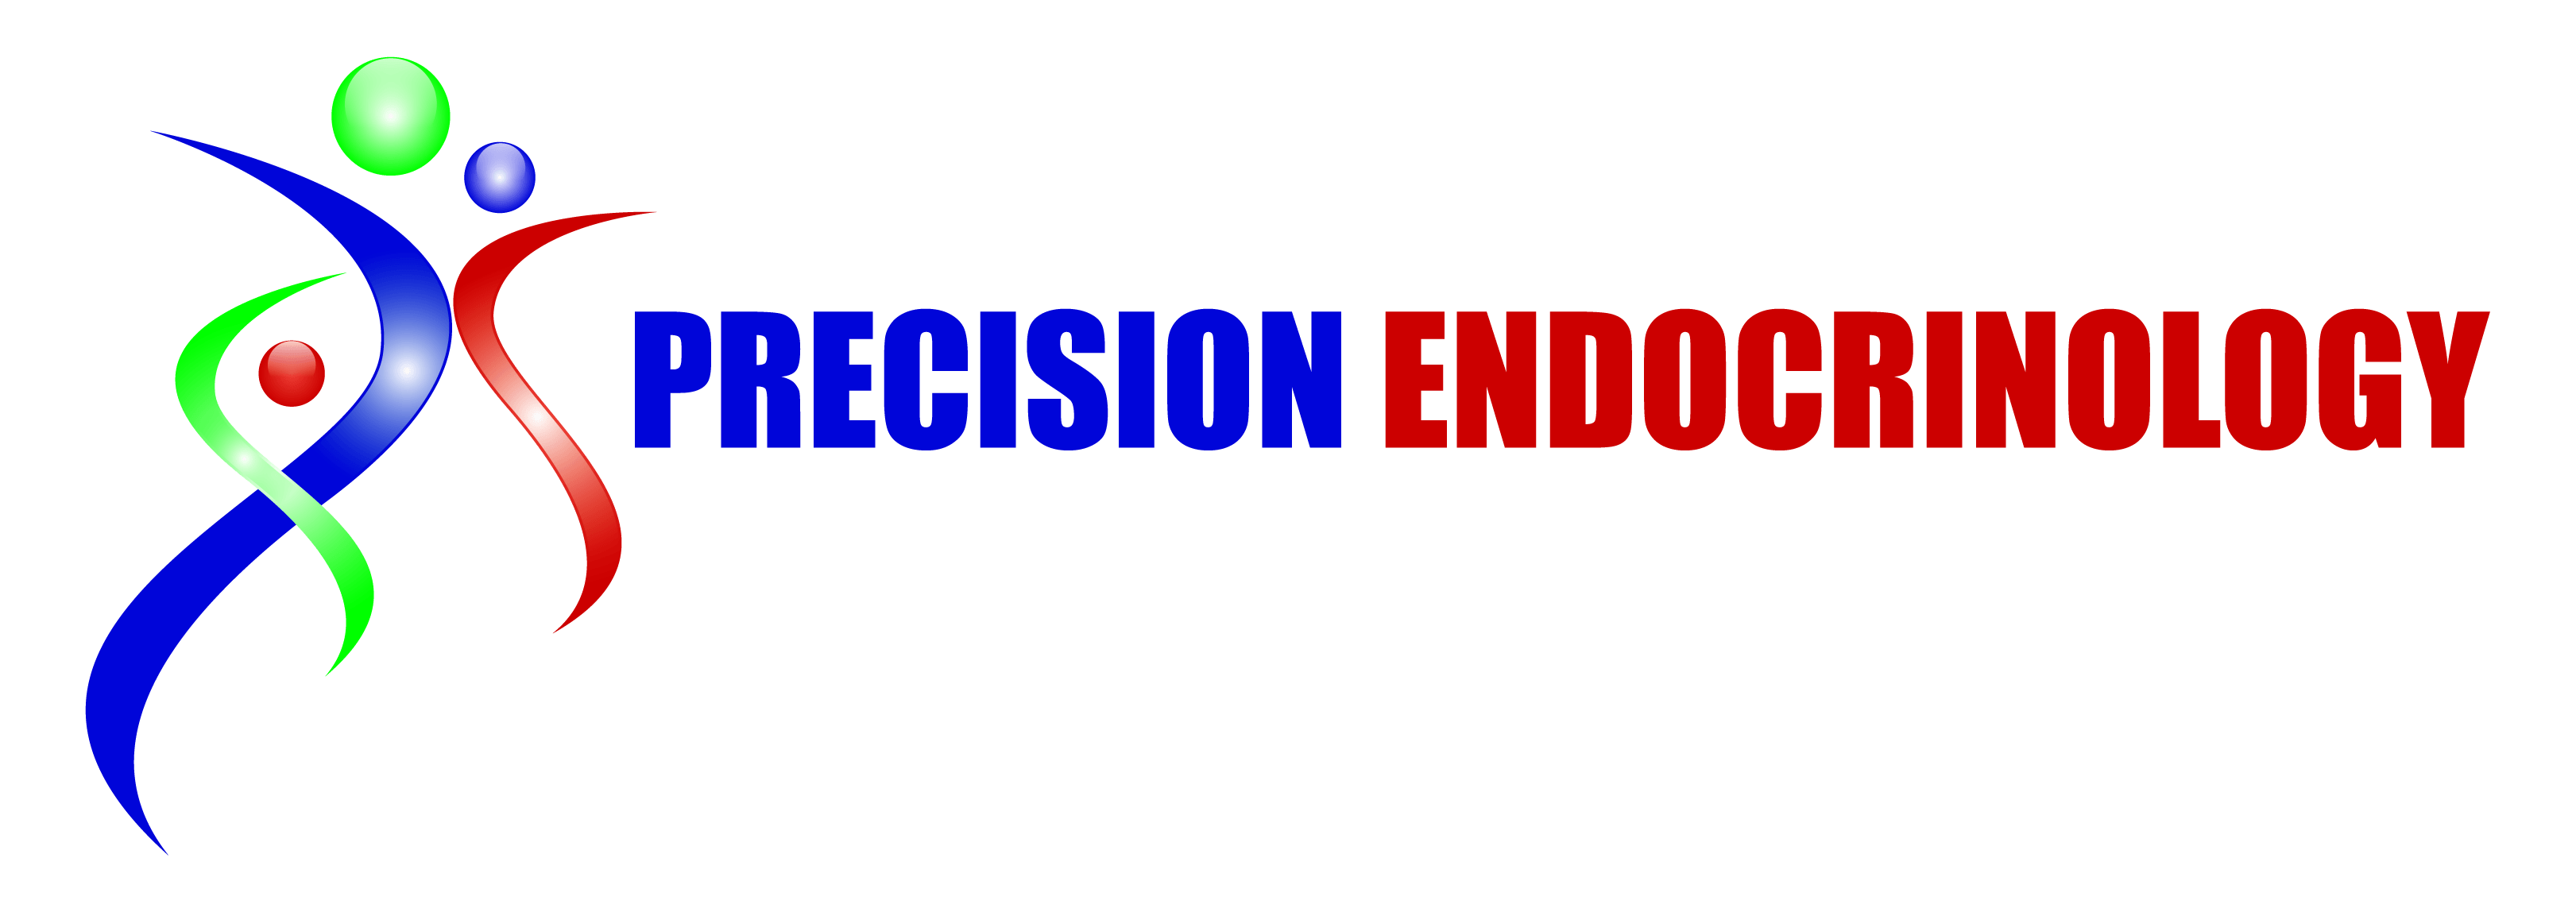 Endocrinology Logo - Precision Endocrinology